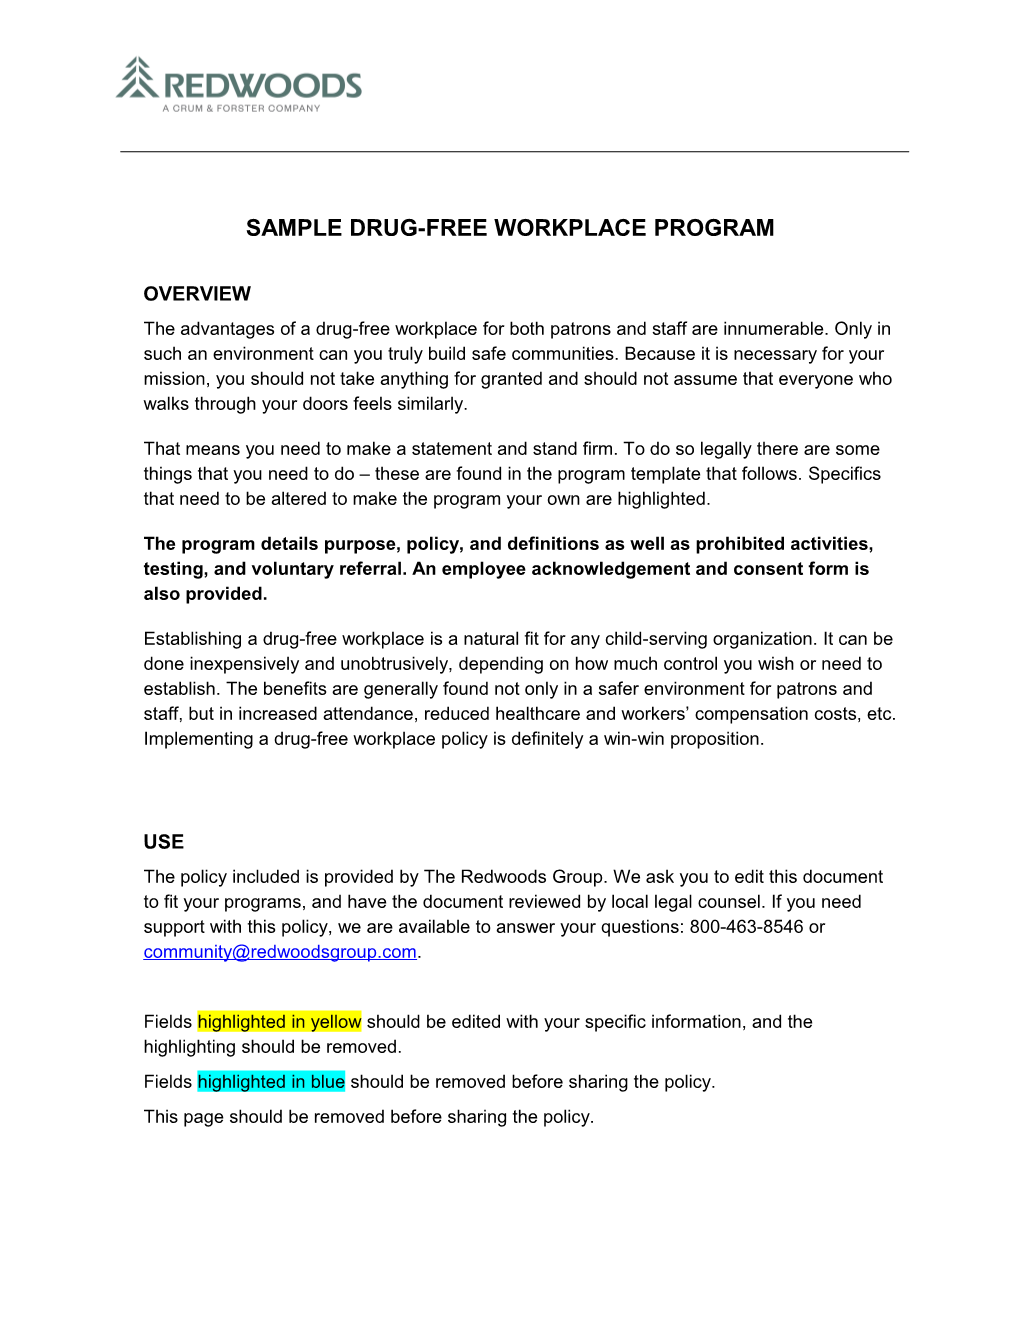 SAMPLE Drug-Free Workplace Program